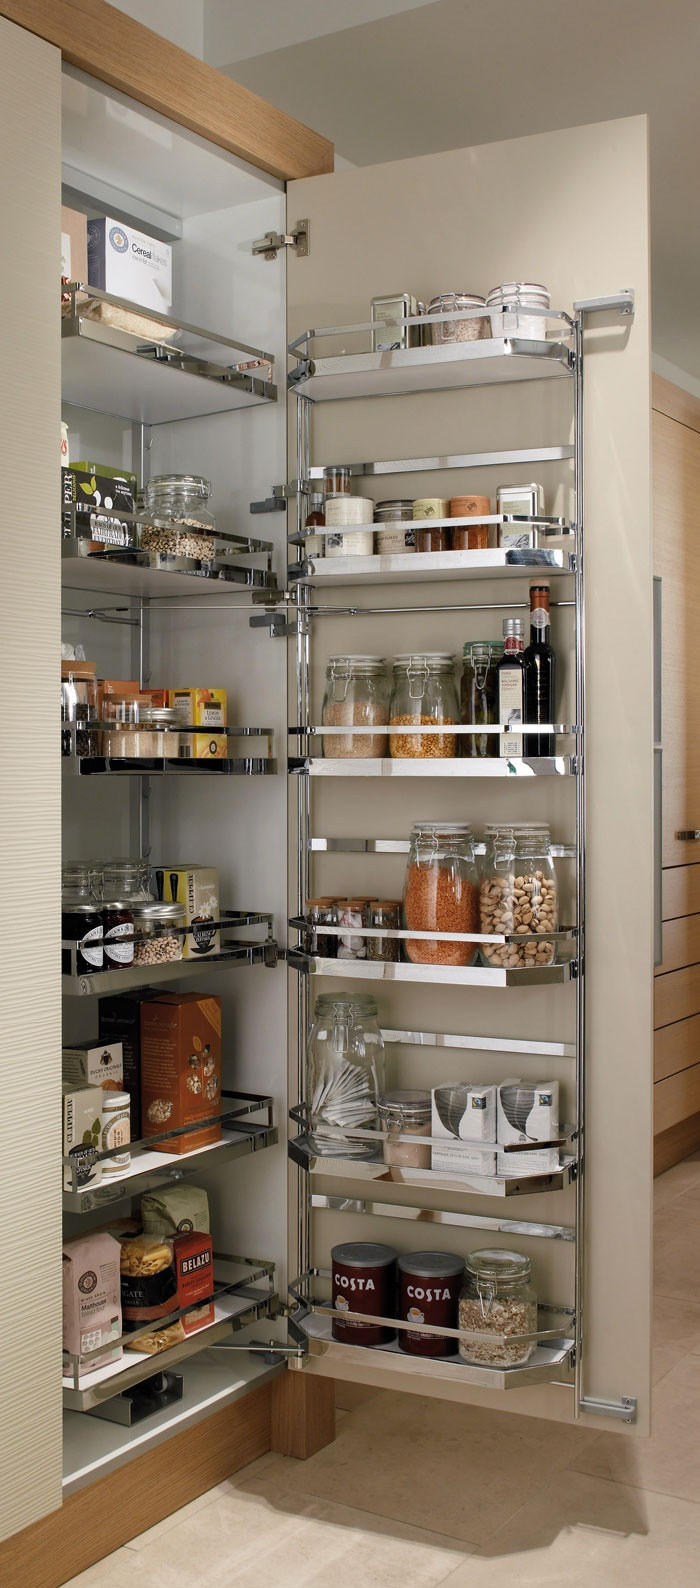 Small Kitchen Storage Ideas
 31 Amazing Storage Ideas For Small Kitchens